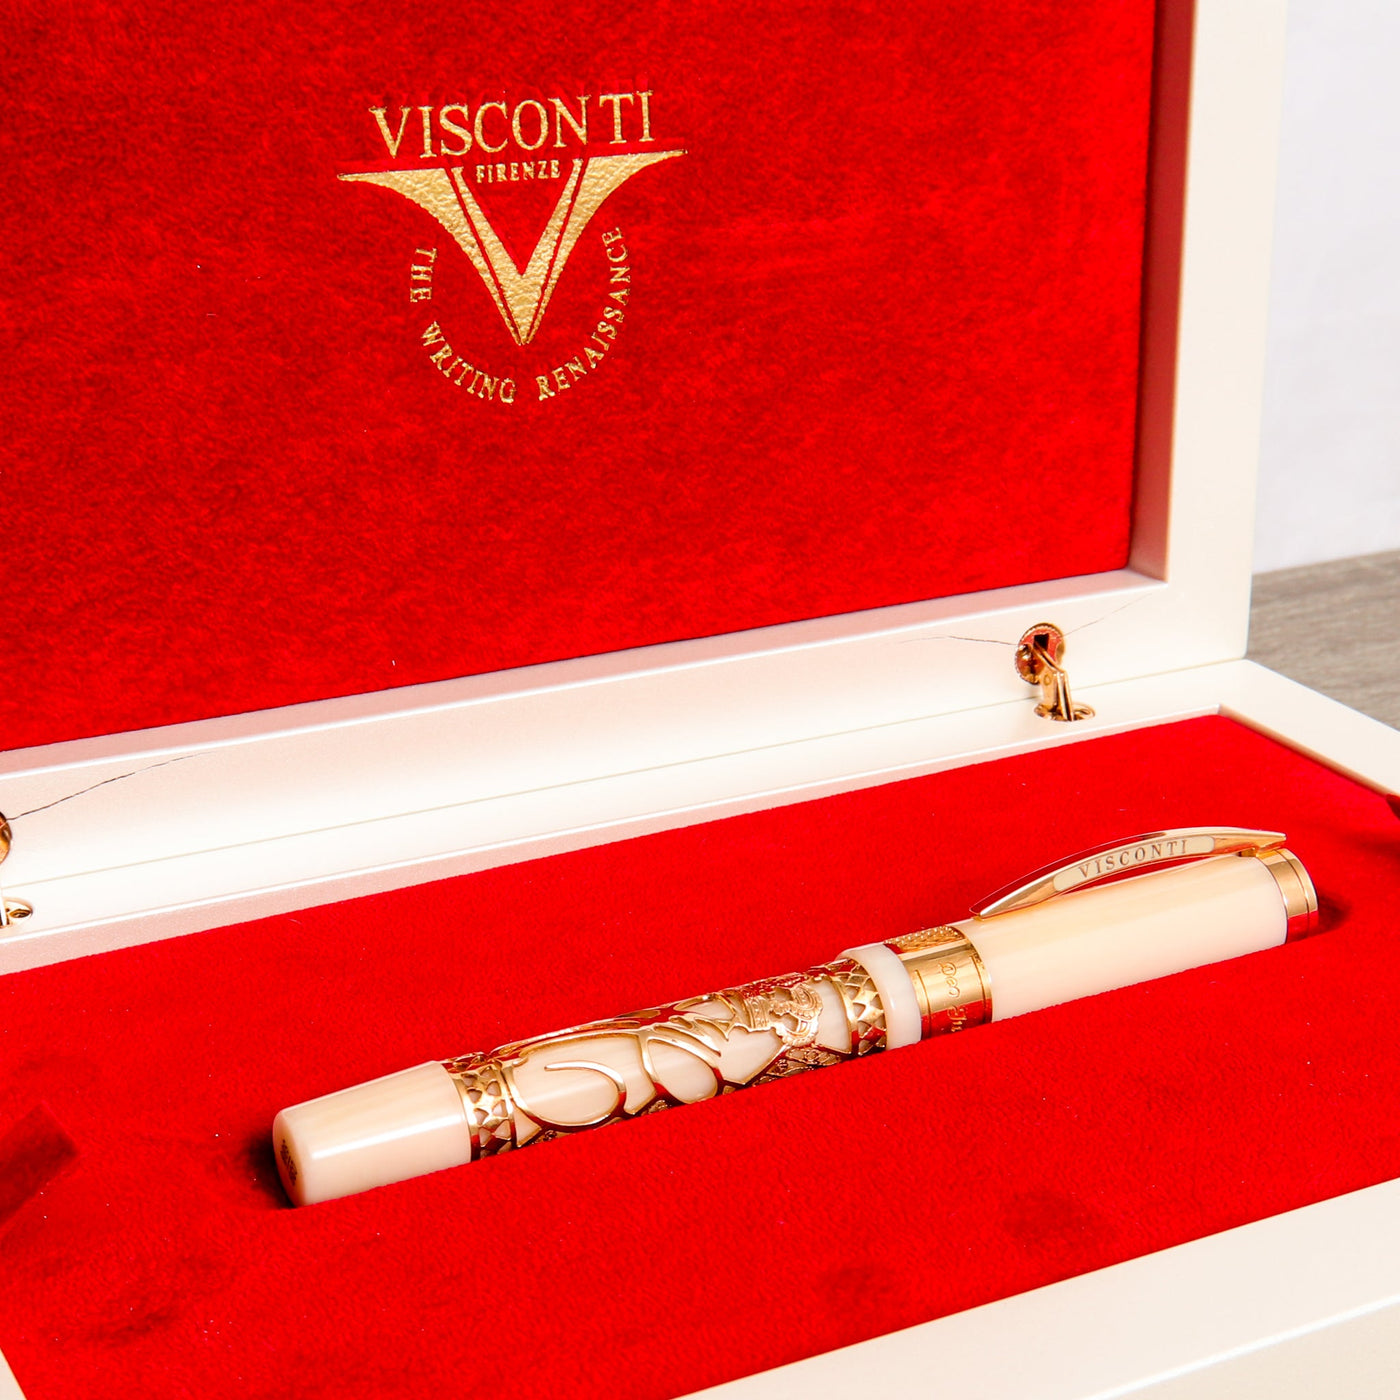 Visconti Monaco Royal Princely Wedding Albert White & Rose Gold Rollerball Pen Inside Display Box